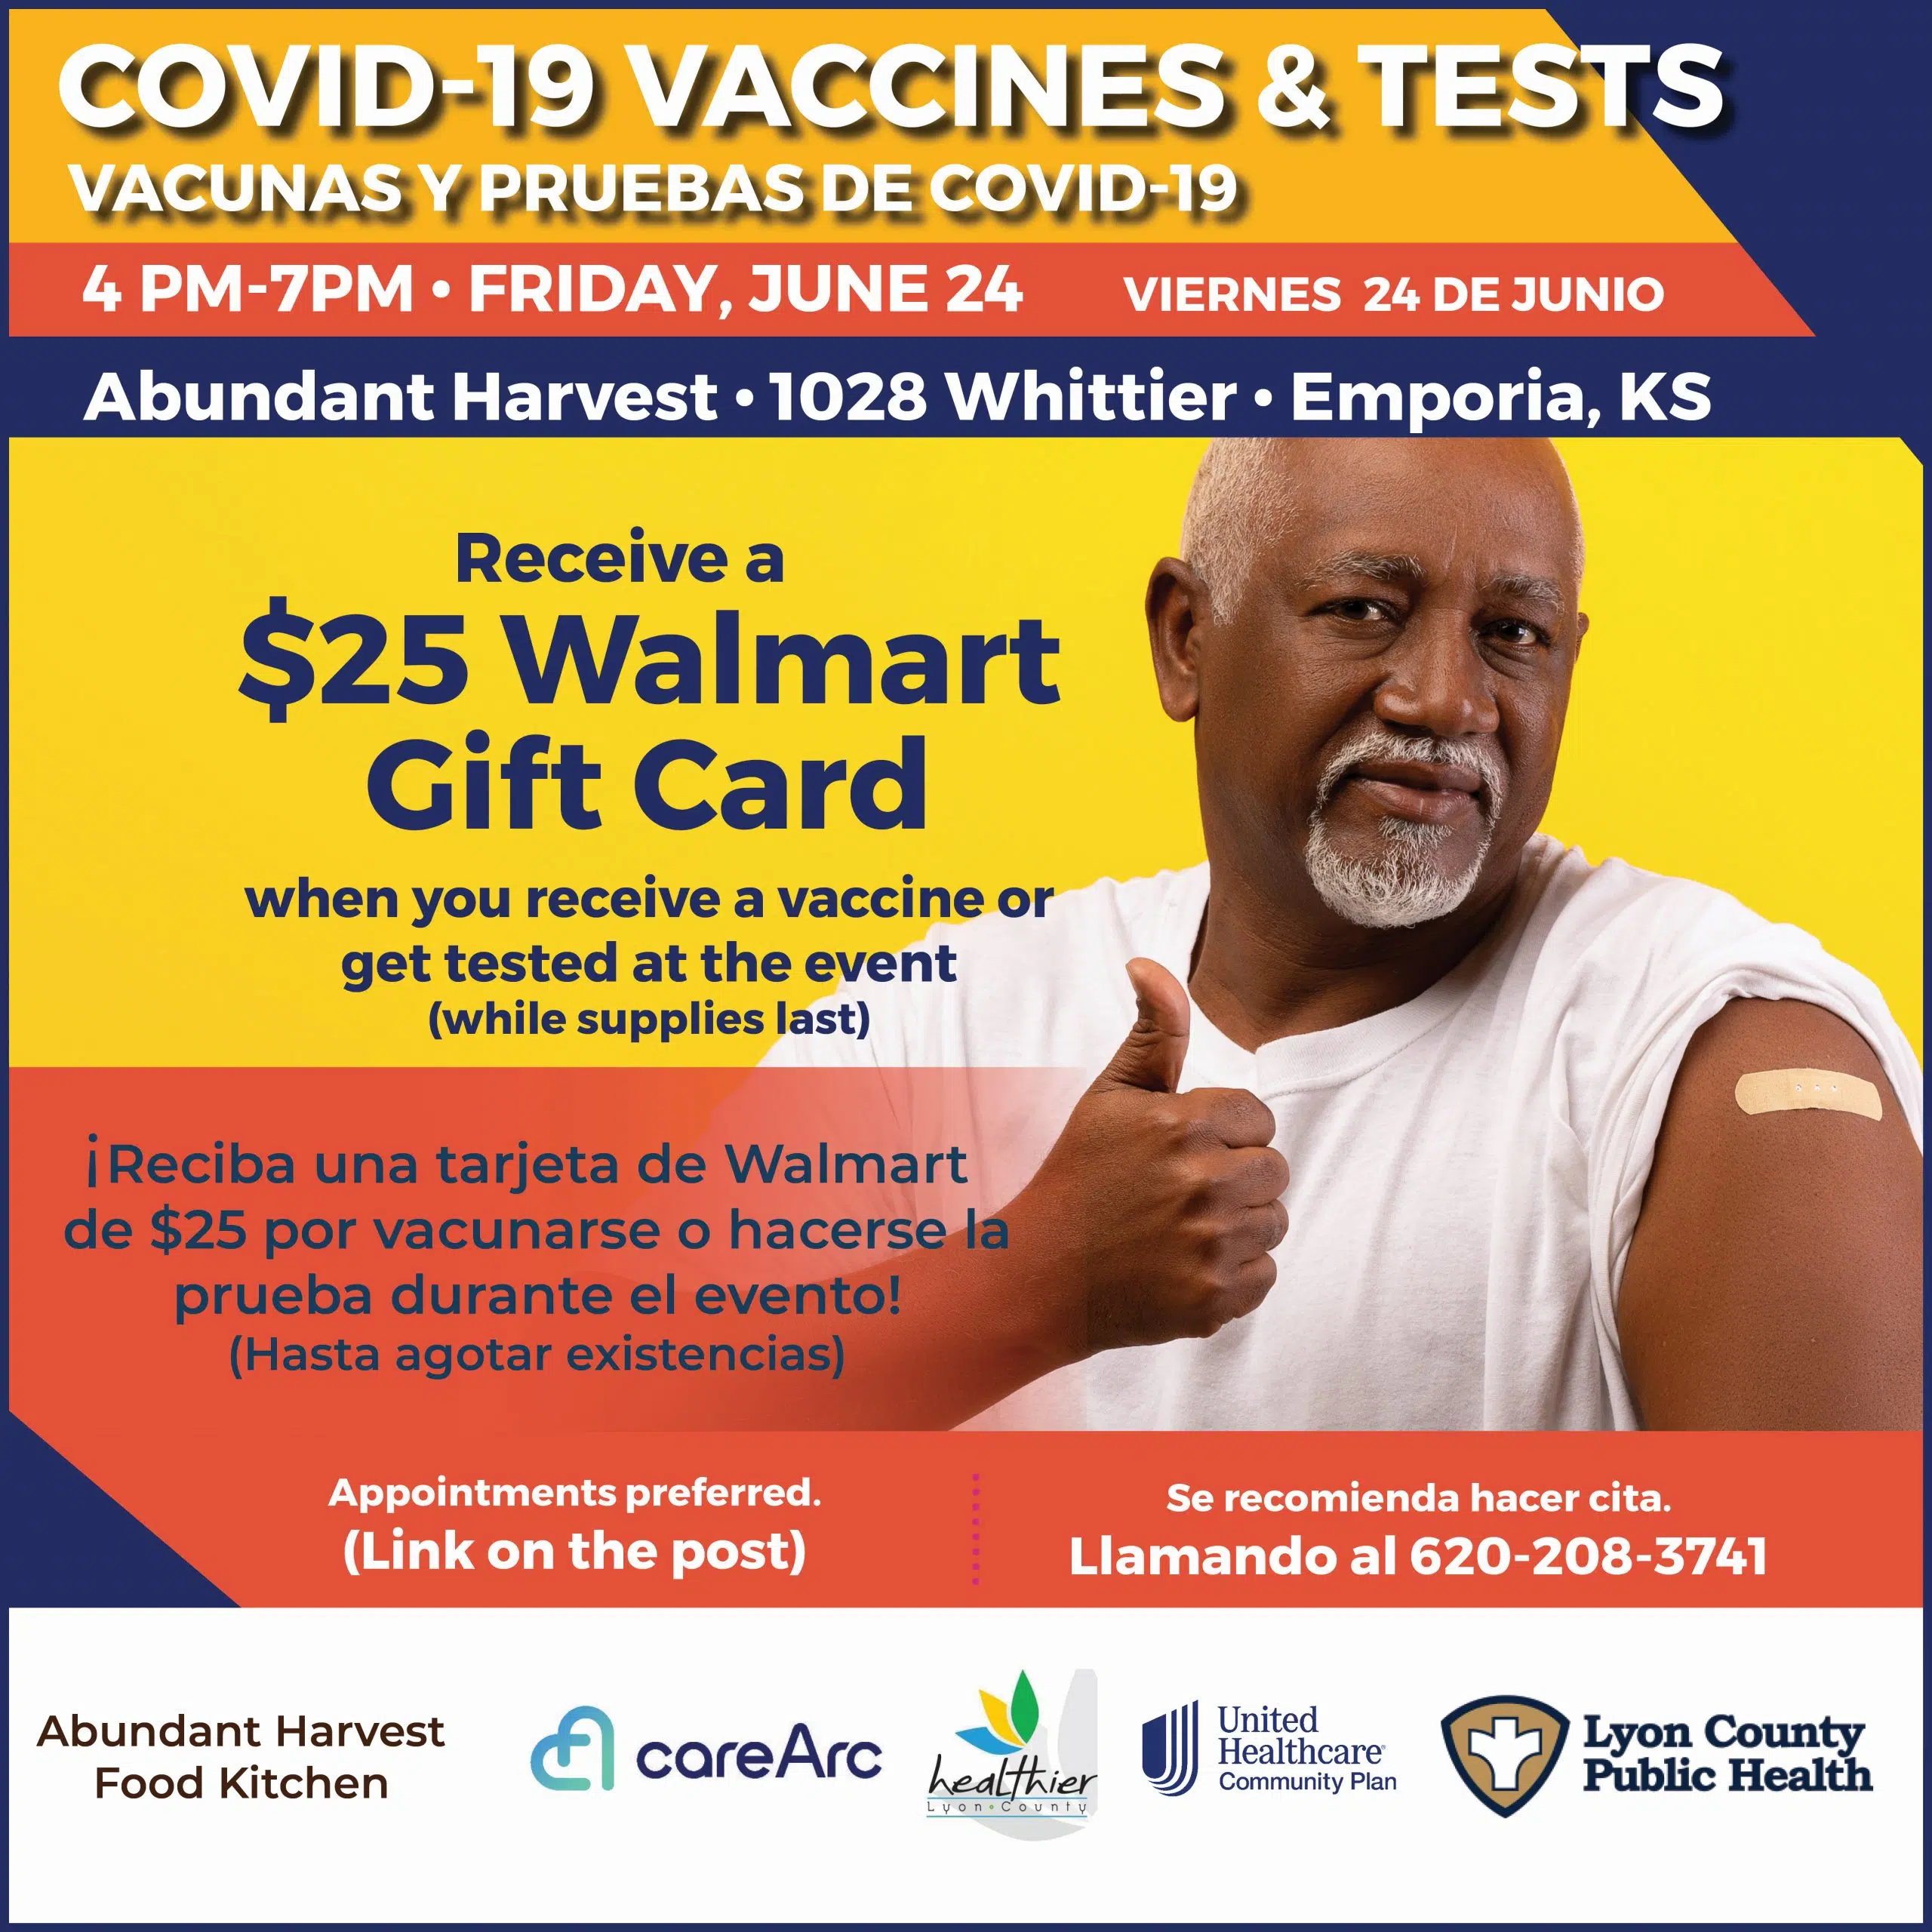 CORONAVIRUS: Healthier Lyon County schedules vaccination, testing clinic Friday